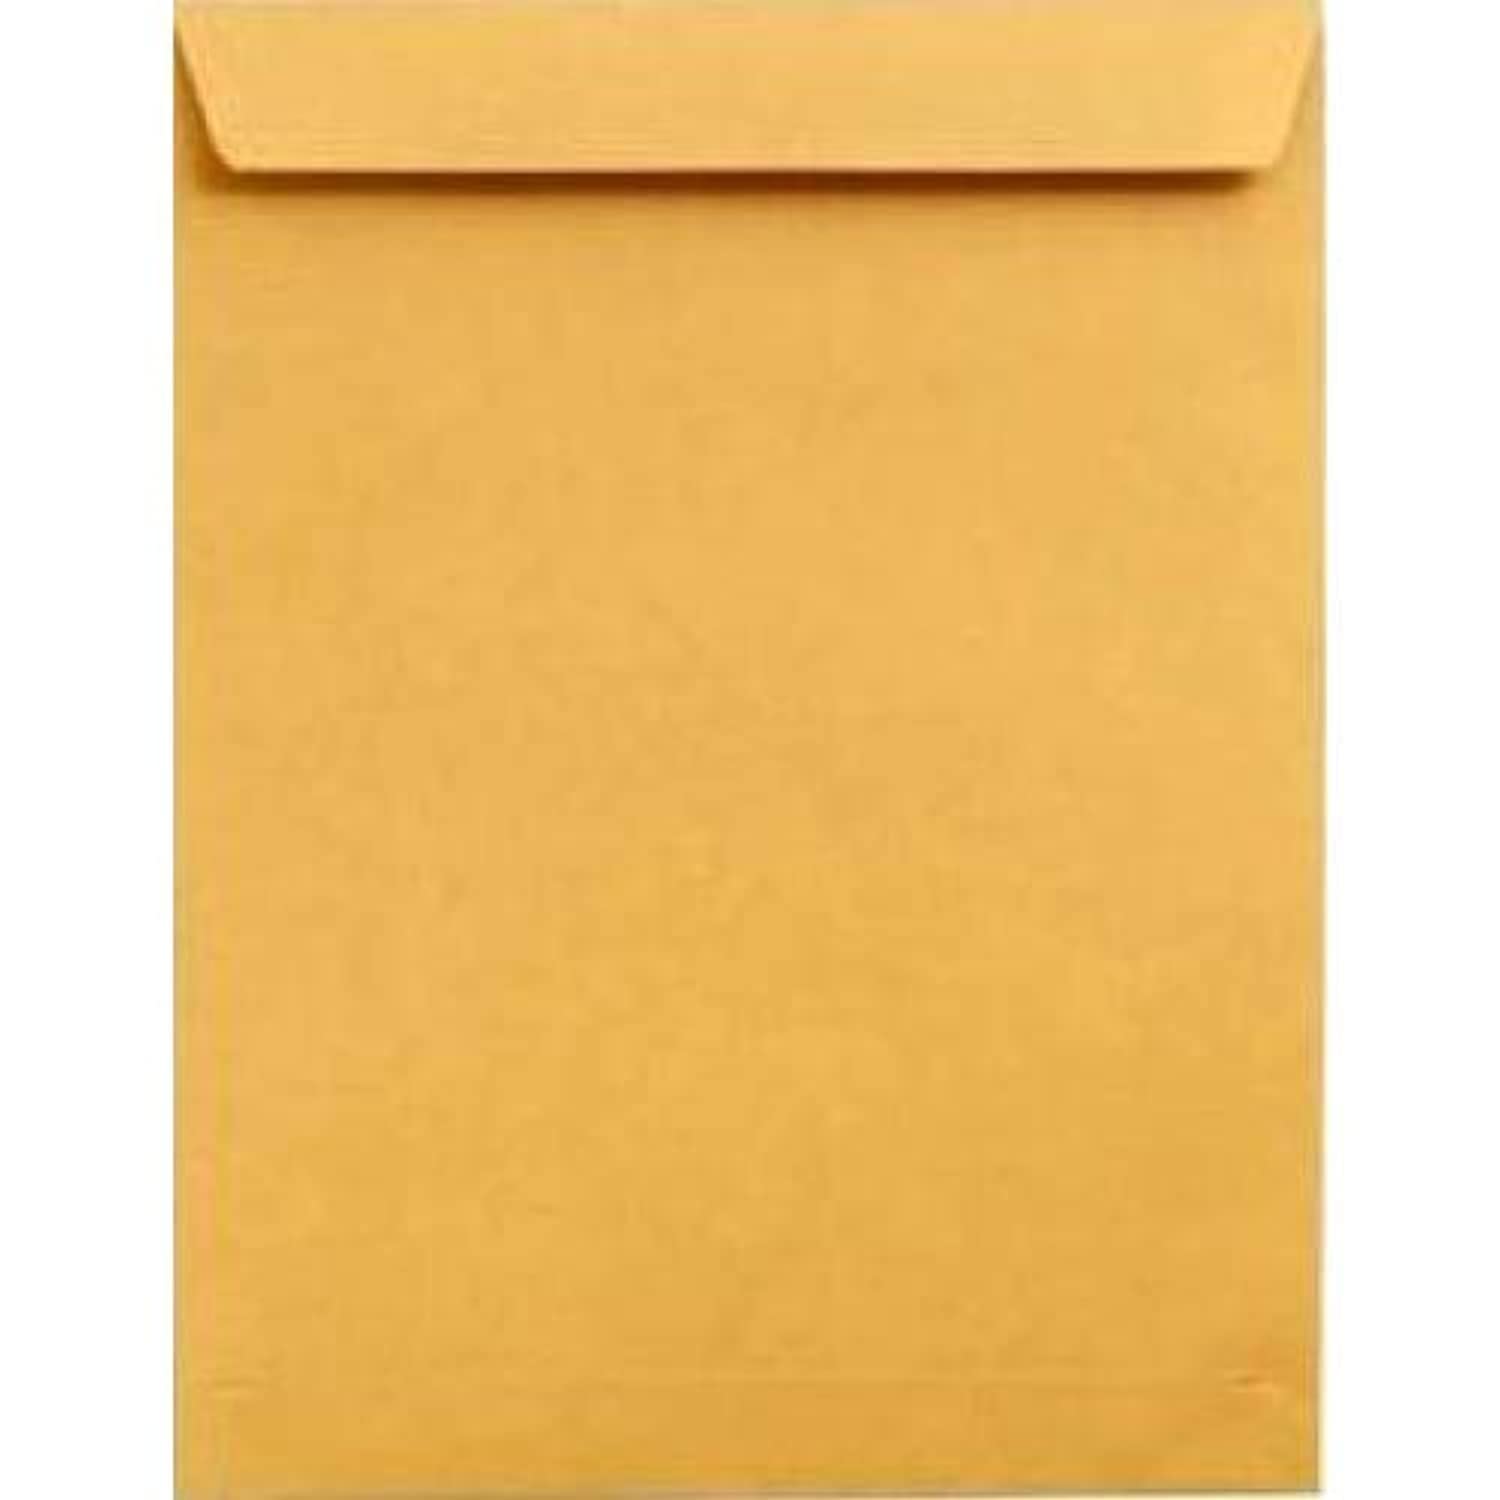 brown envelopes - الاقتصاد للتجهيزات المكتبية